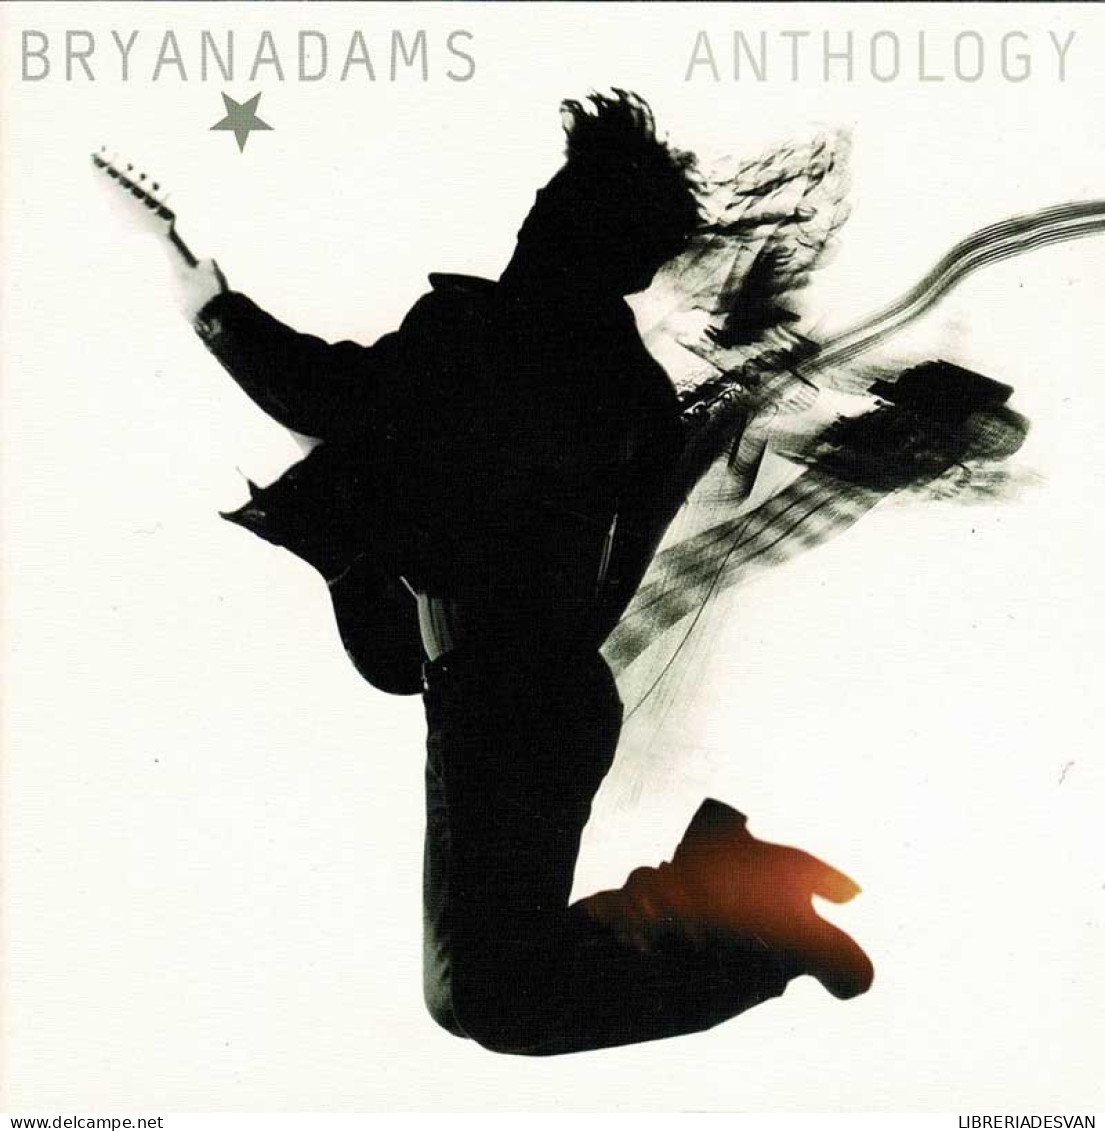 Bryan Adams - Anthology. 2 X CD. CD - Rock